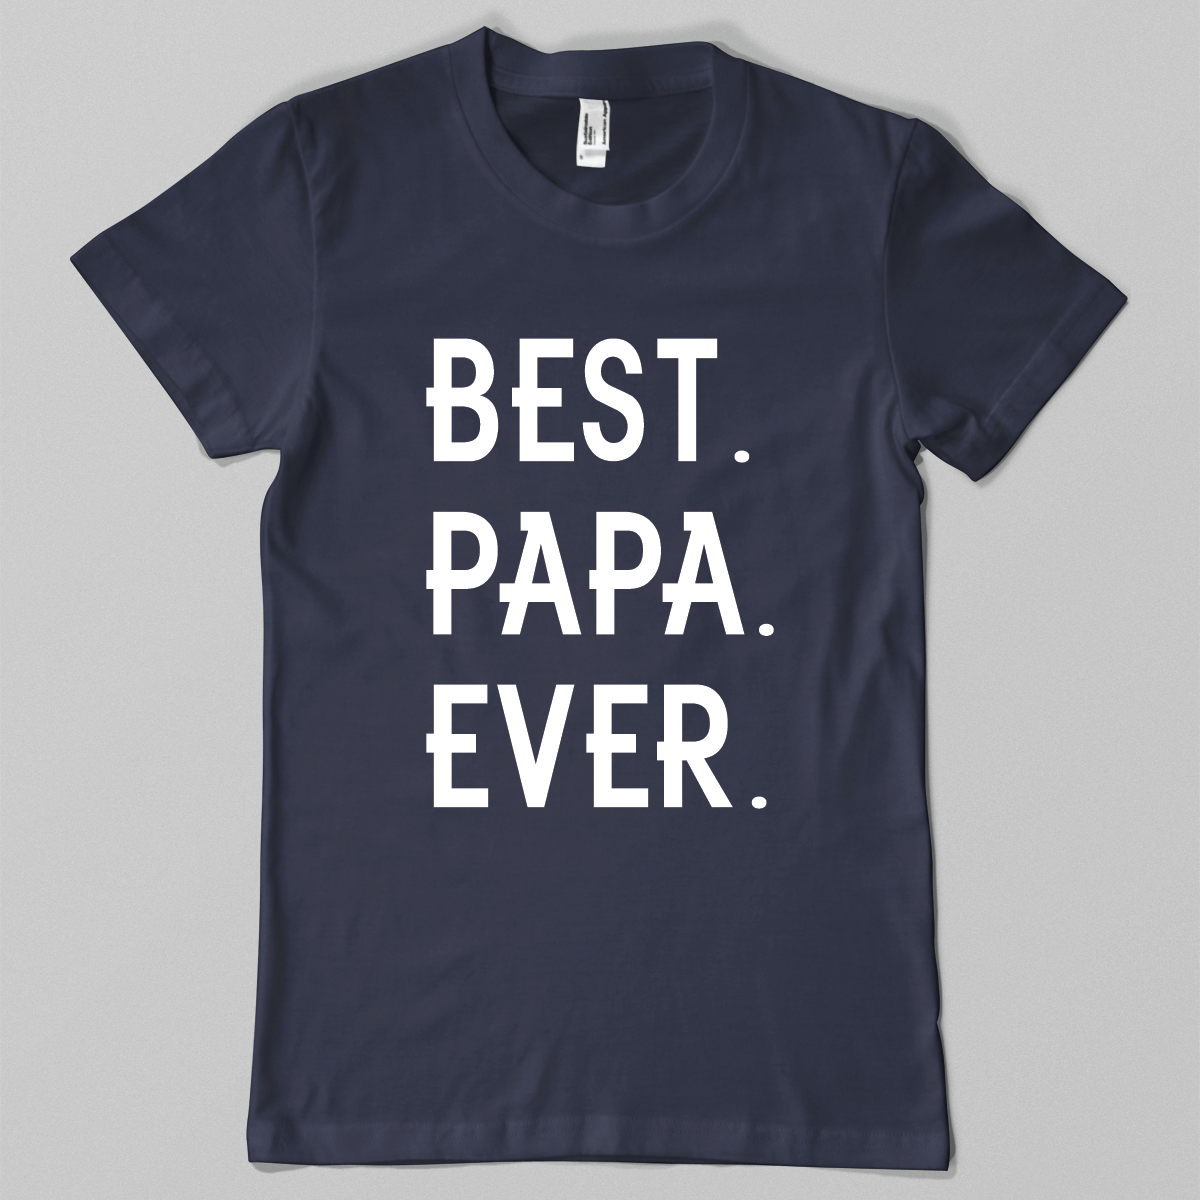 Best. Papa. Ever.